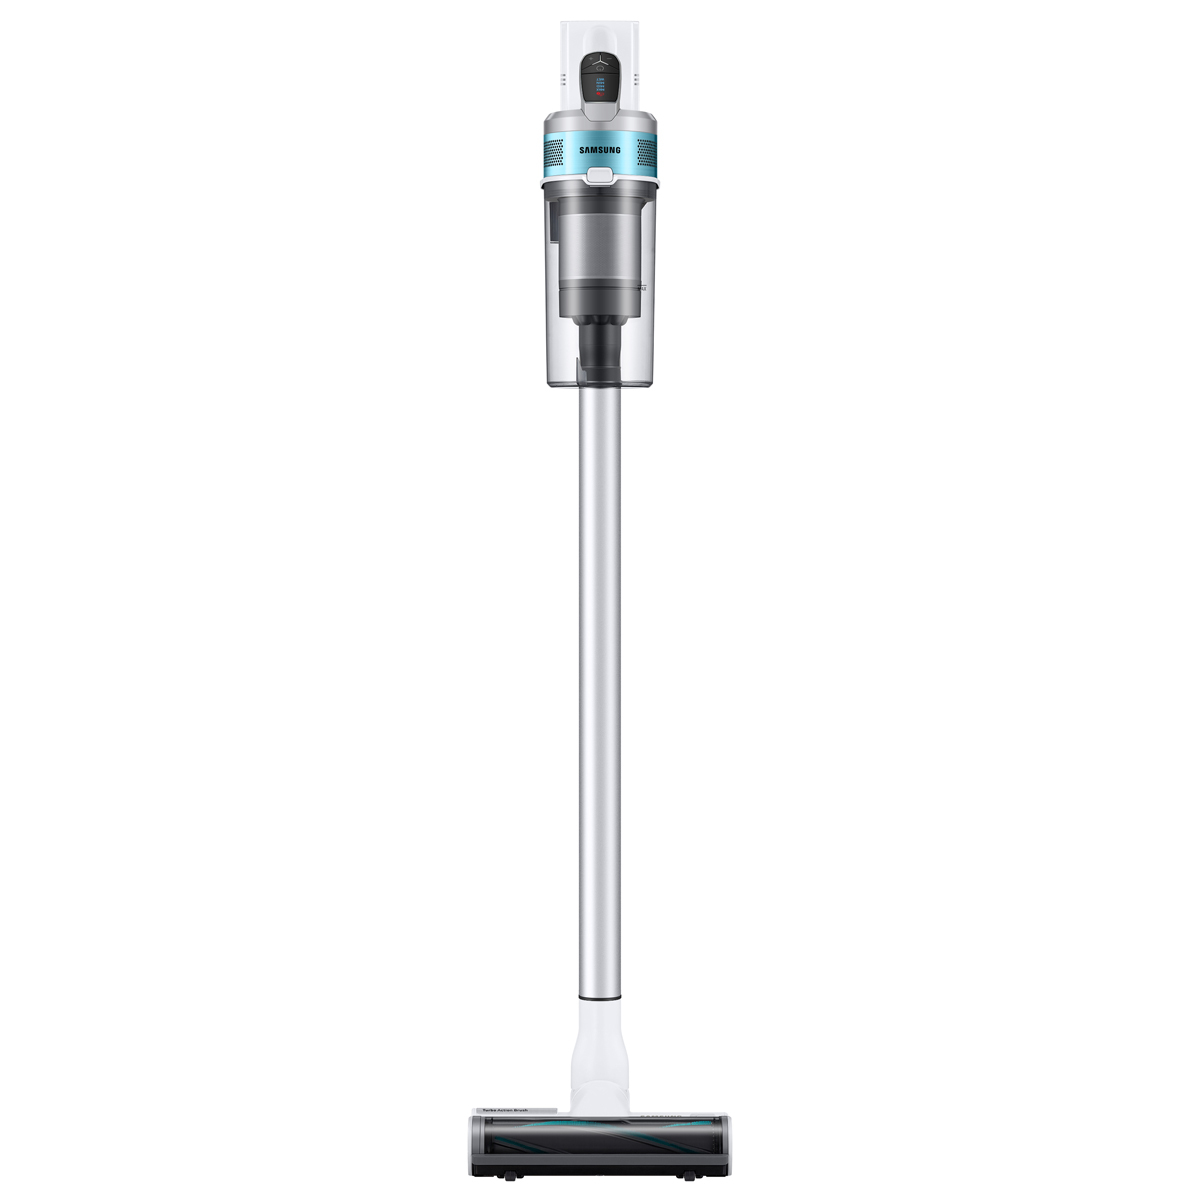 Samsung Jet 70 Cordless Pet Stick Vacuum Cleaner VS15T7032R1/EU